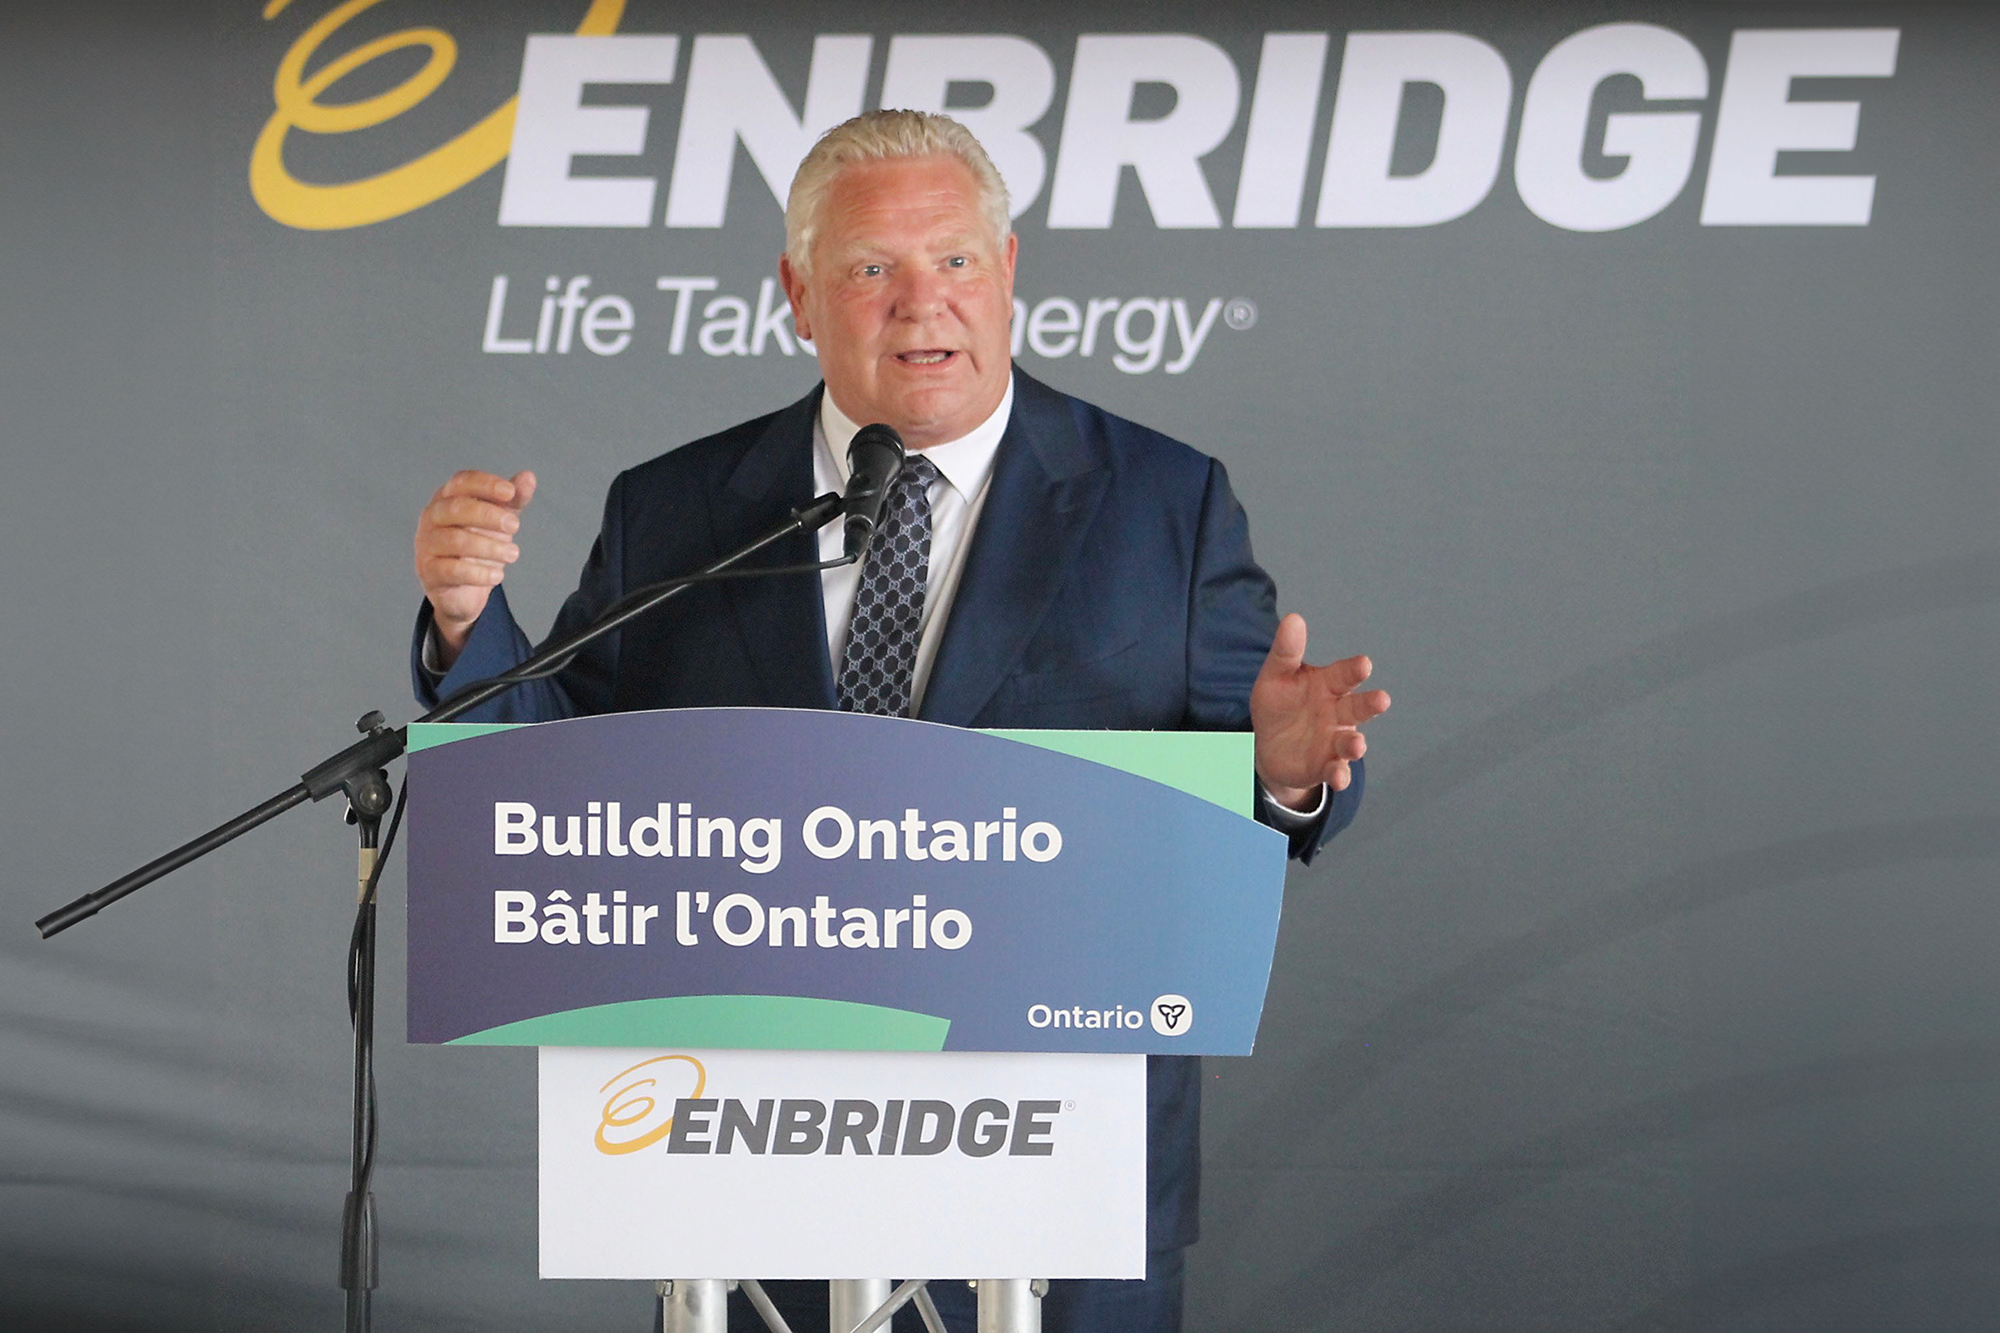 Ontario Premier Doug Ford speaking at the announced Enbridge Gas expansion